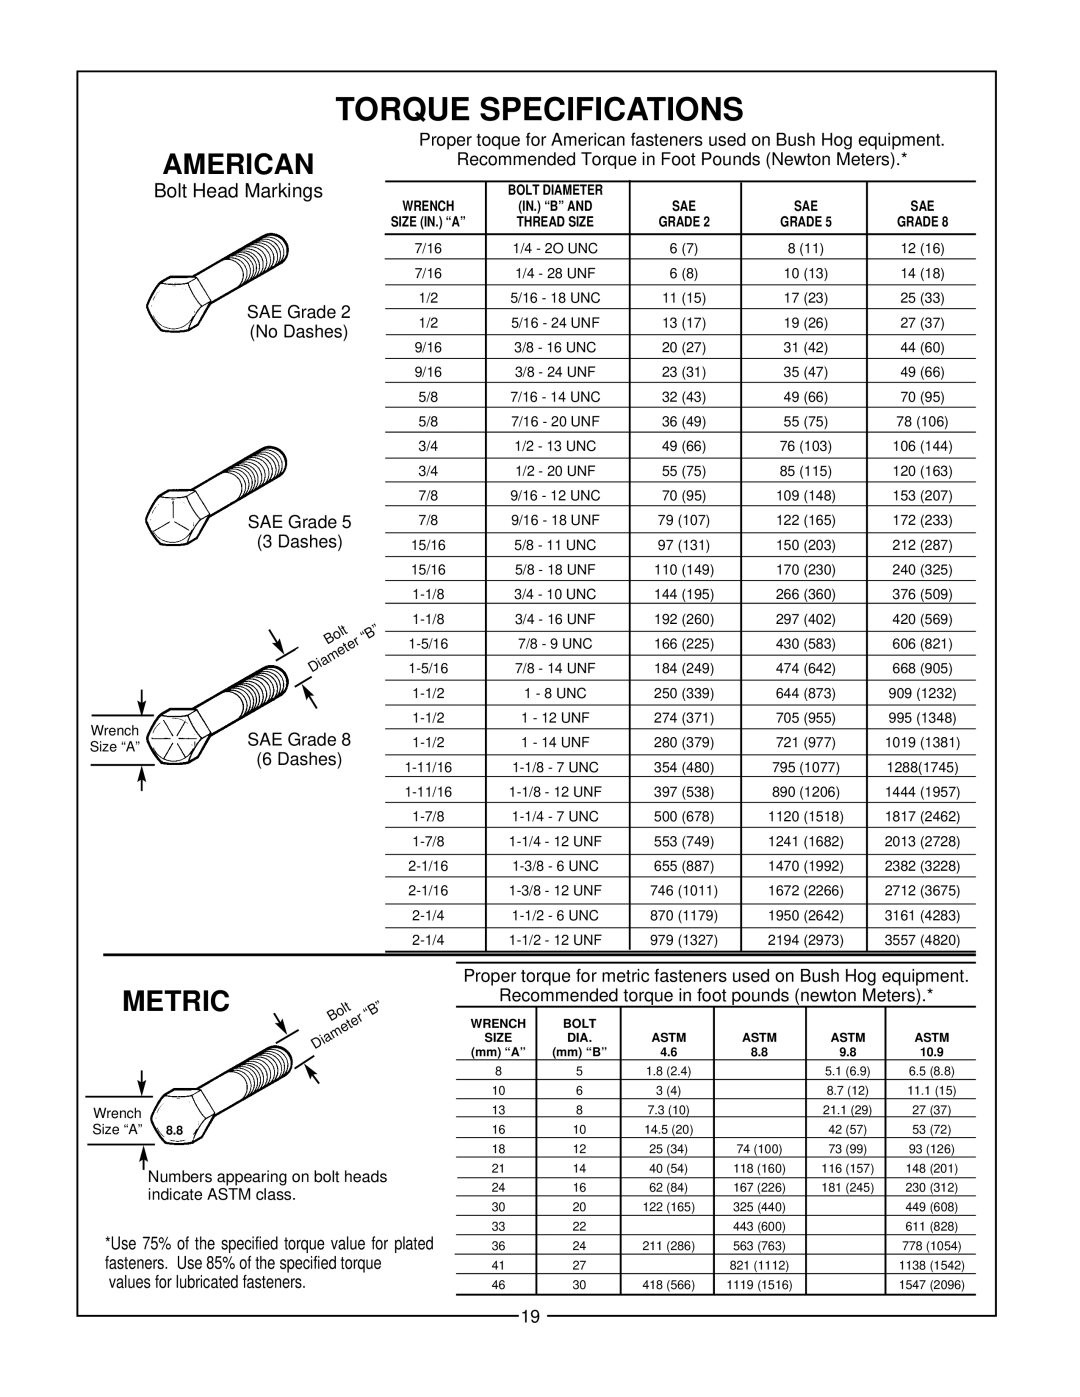 Bush Hog GT 48 manual Torque Specifications, American, Metric, Bolt Head Markings 